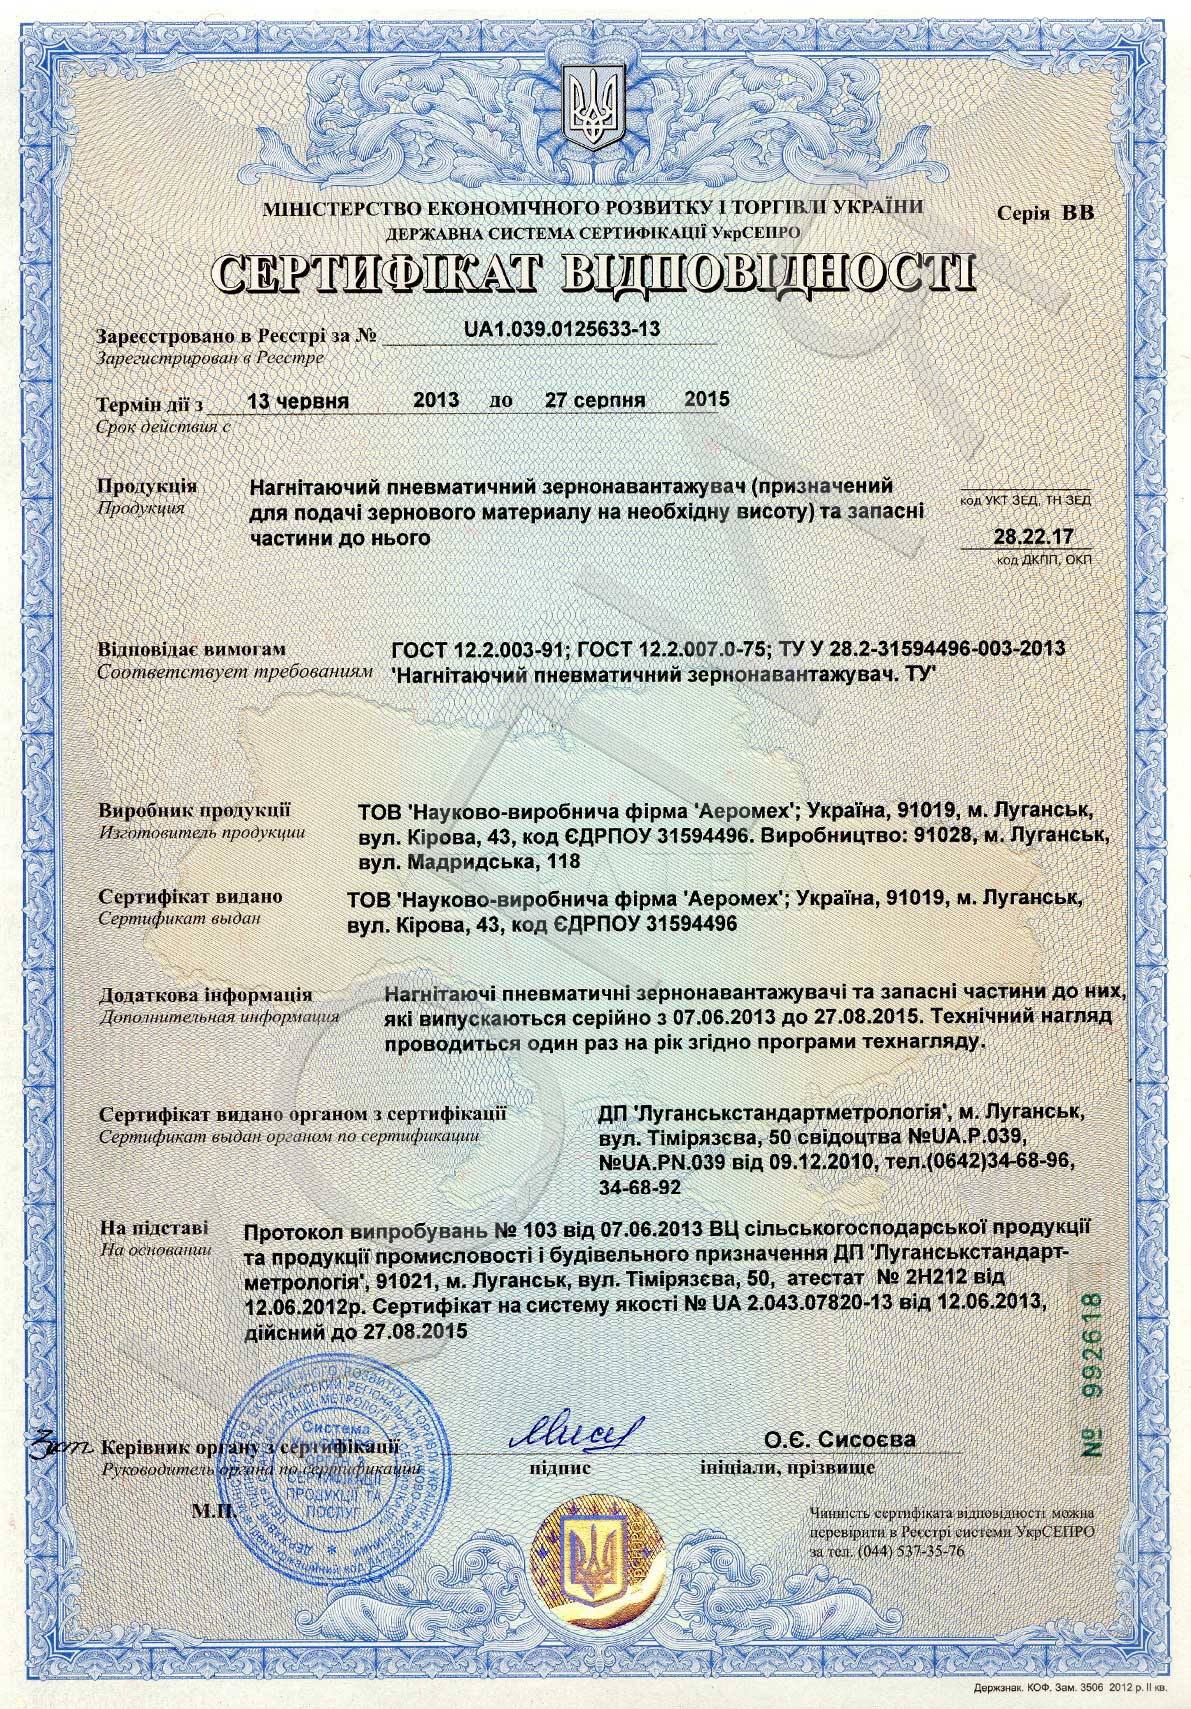 Ukrainian certificate for forcing pneumatic grain loader